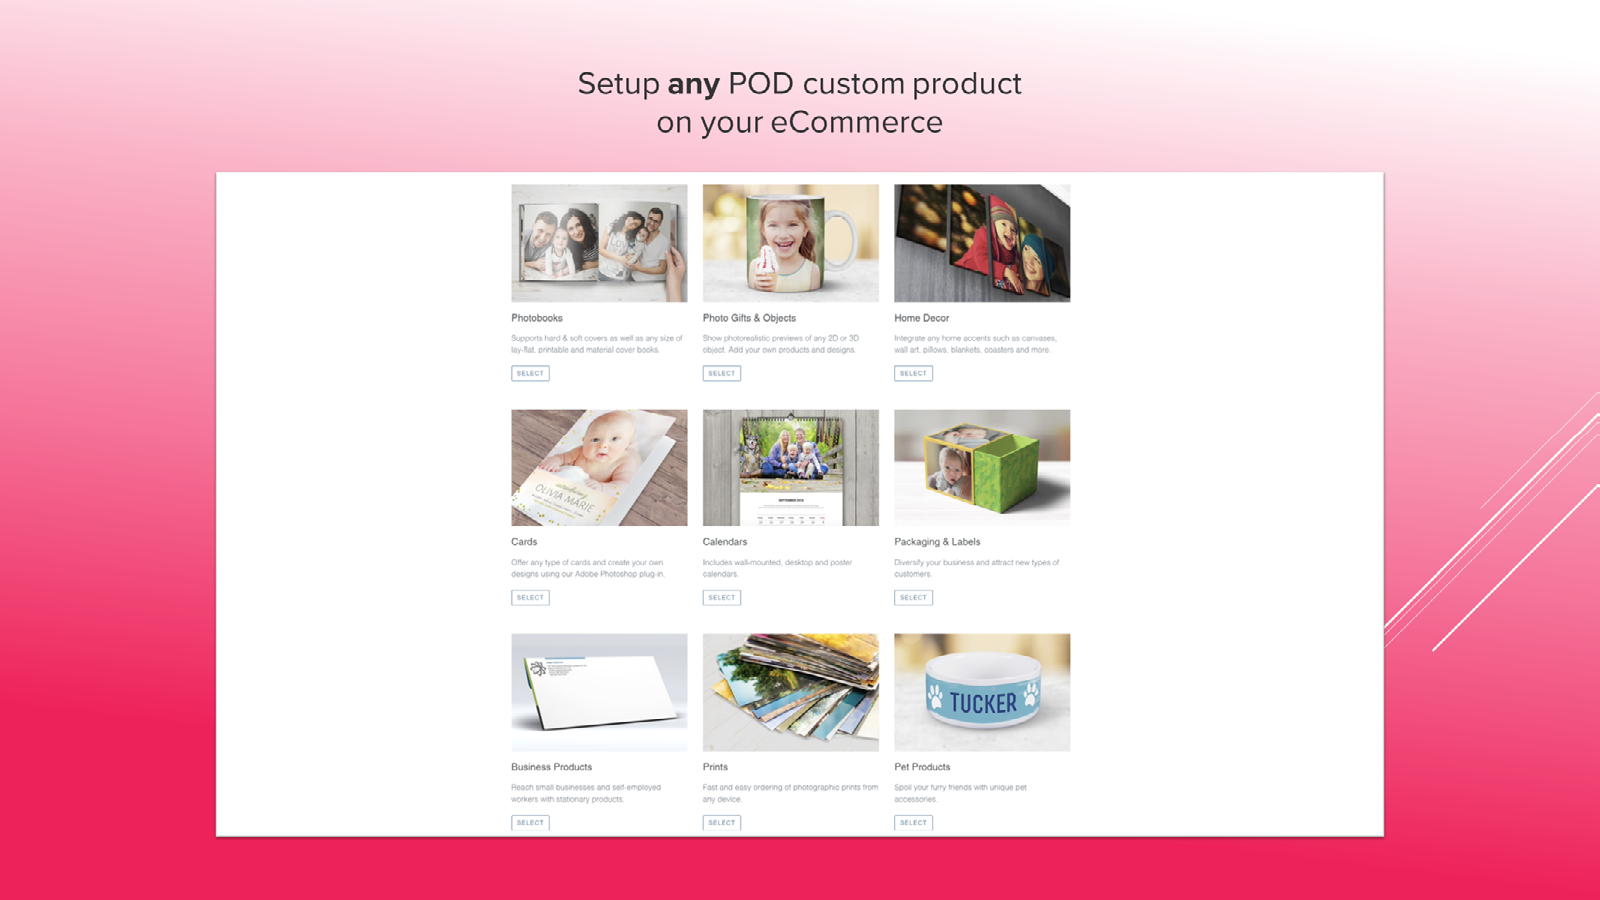 Offer any POD & Web2Print custom product